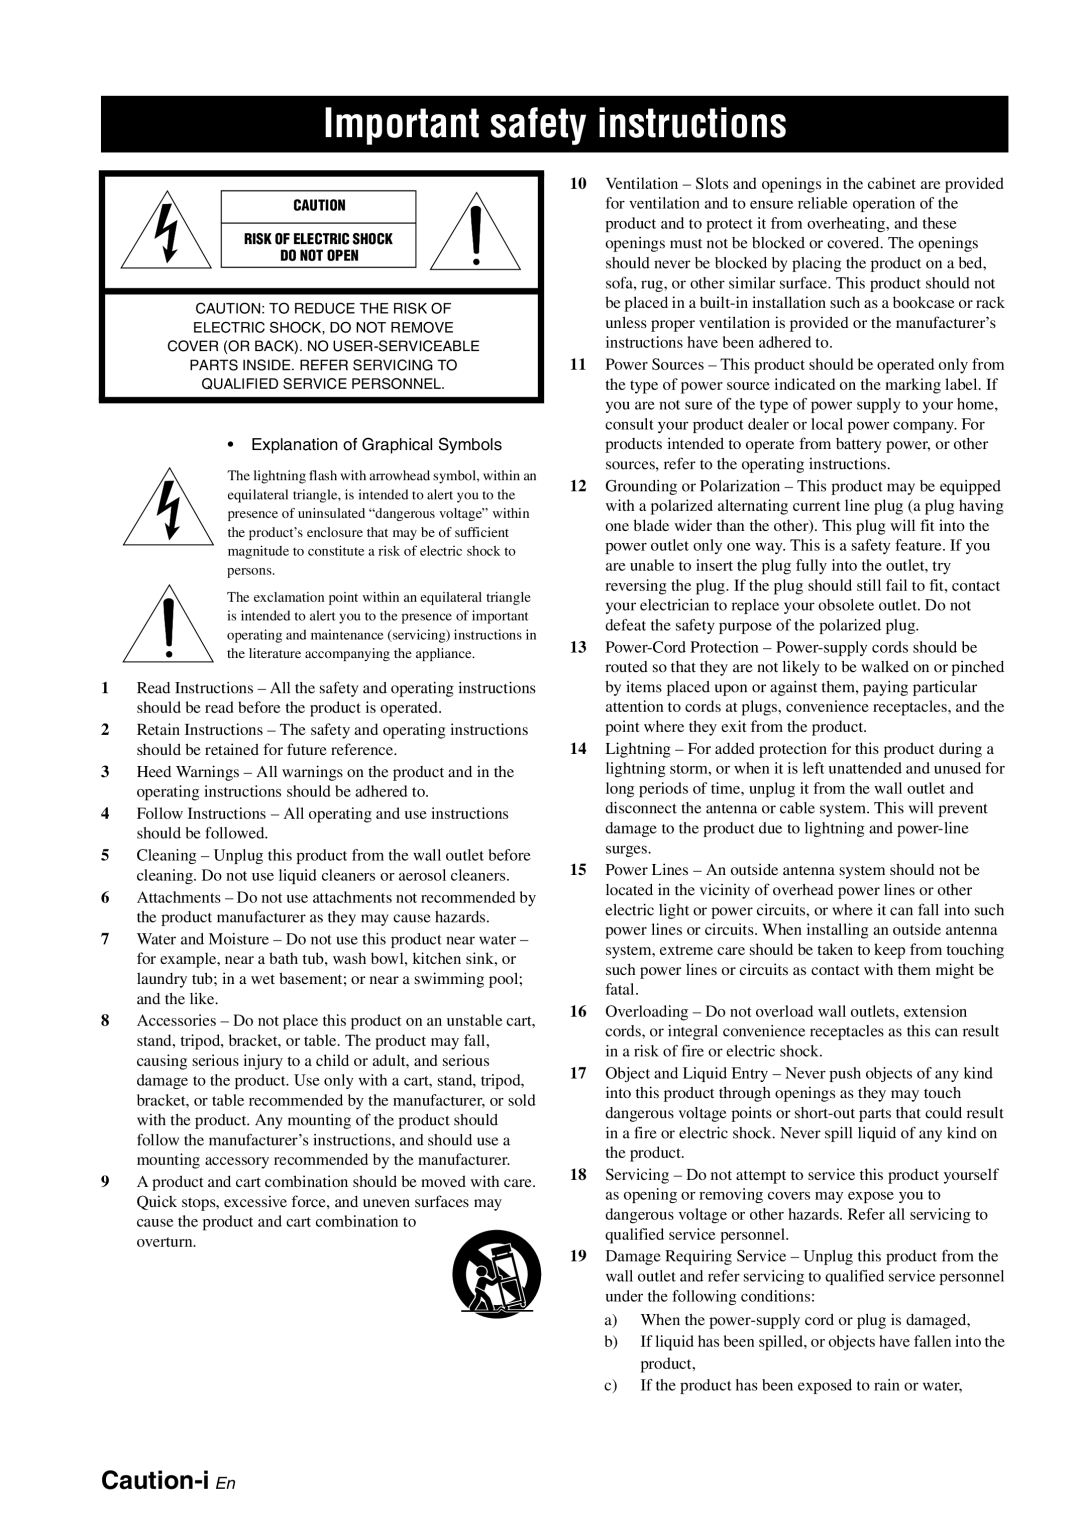 Yamaha HTR-6080 owner manual Caution-i En, Important safety instructions 